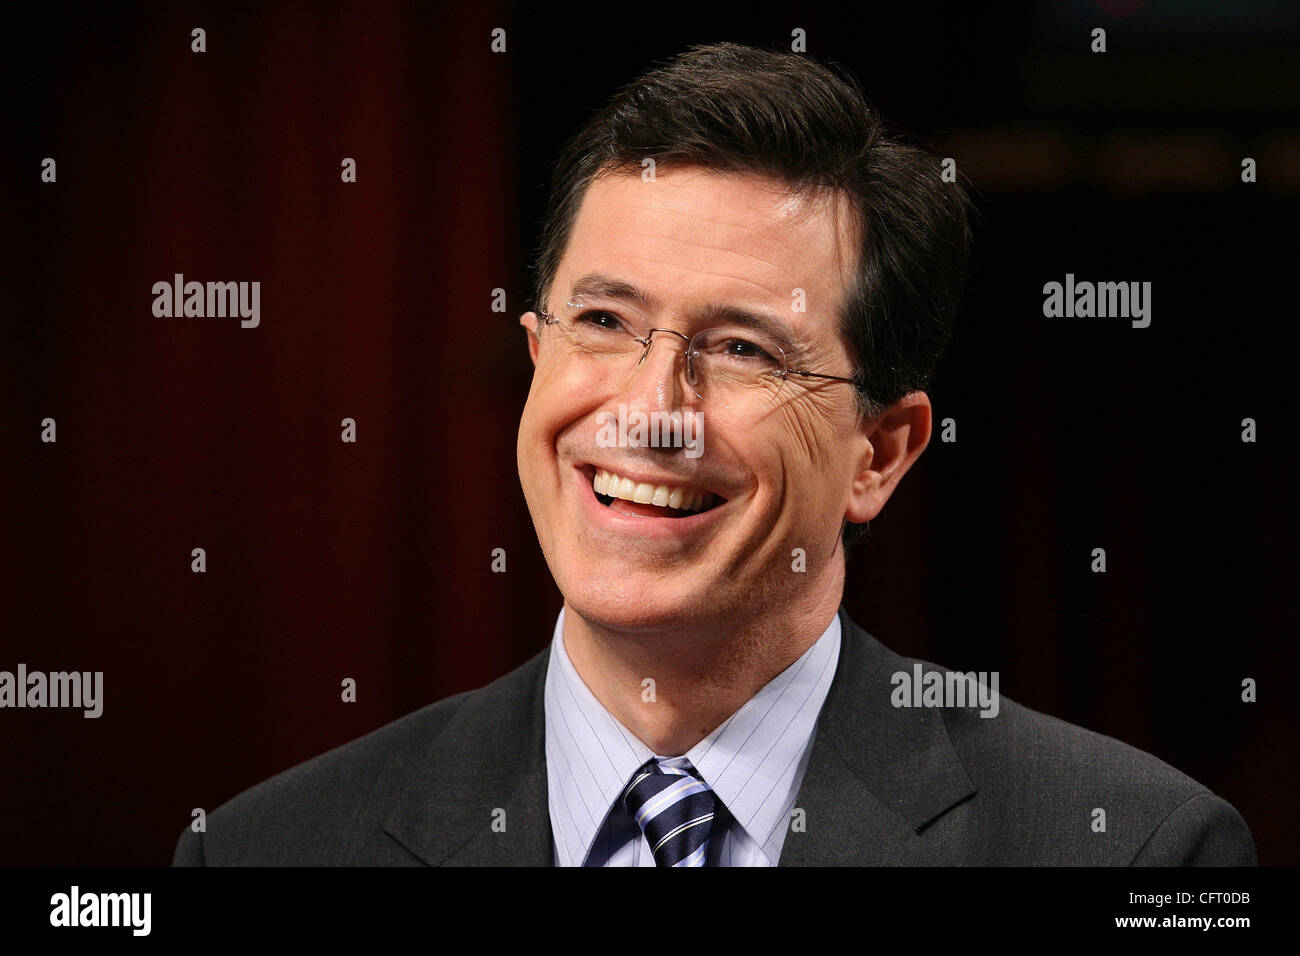 12/1/06 - CAMBRIDGE, MA Stephen Colbert at Harvard Stock Photo